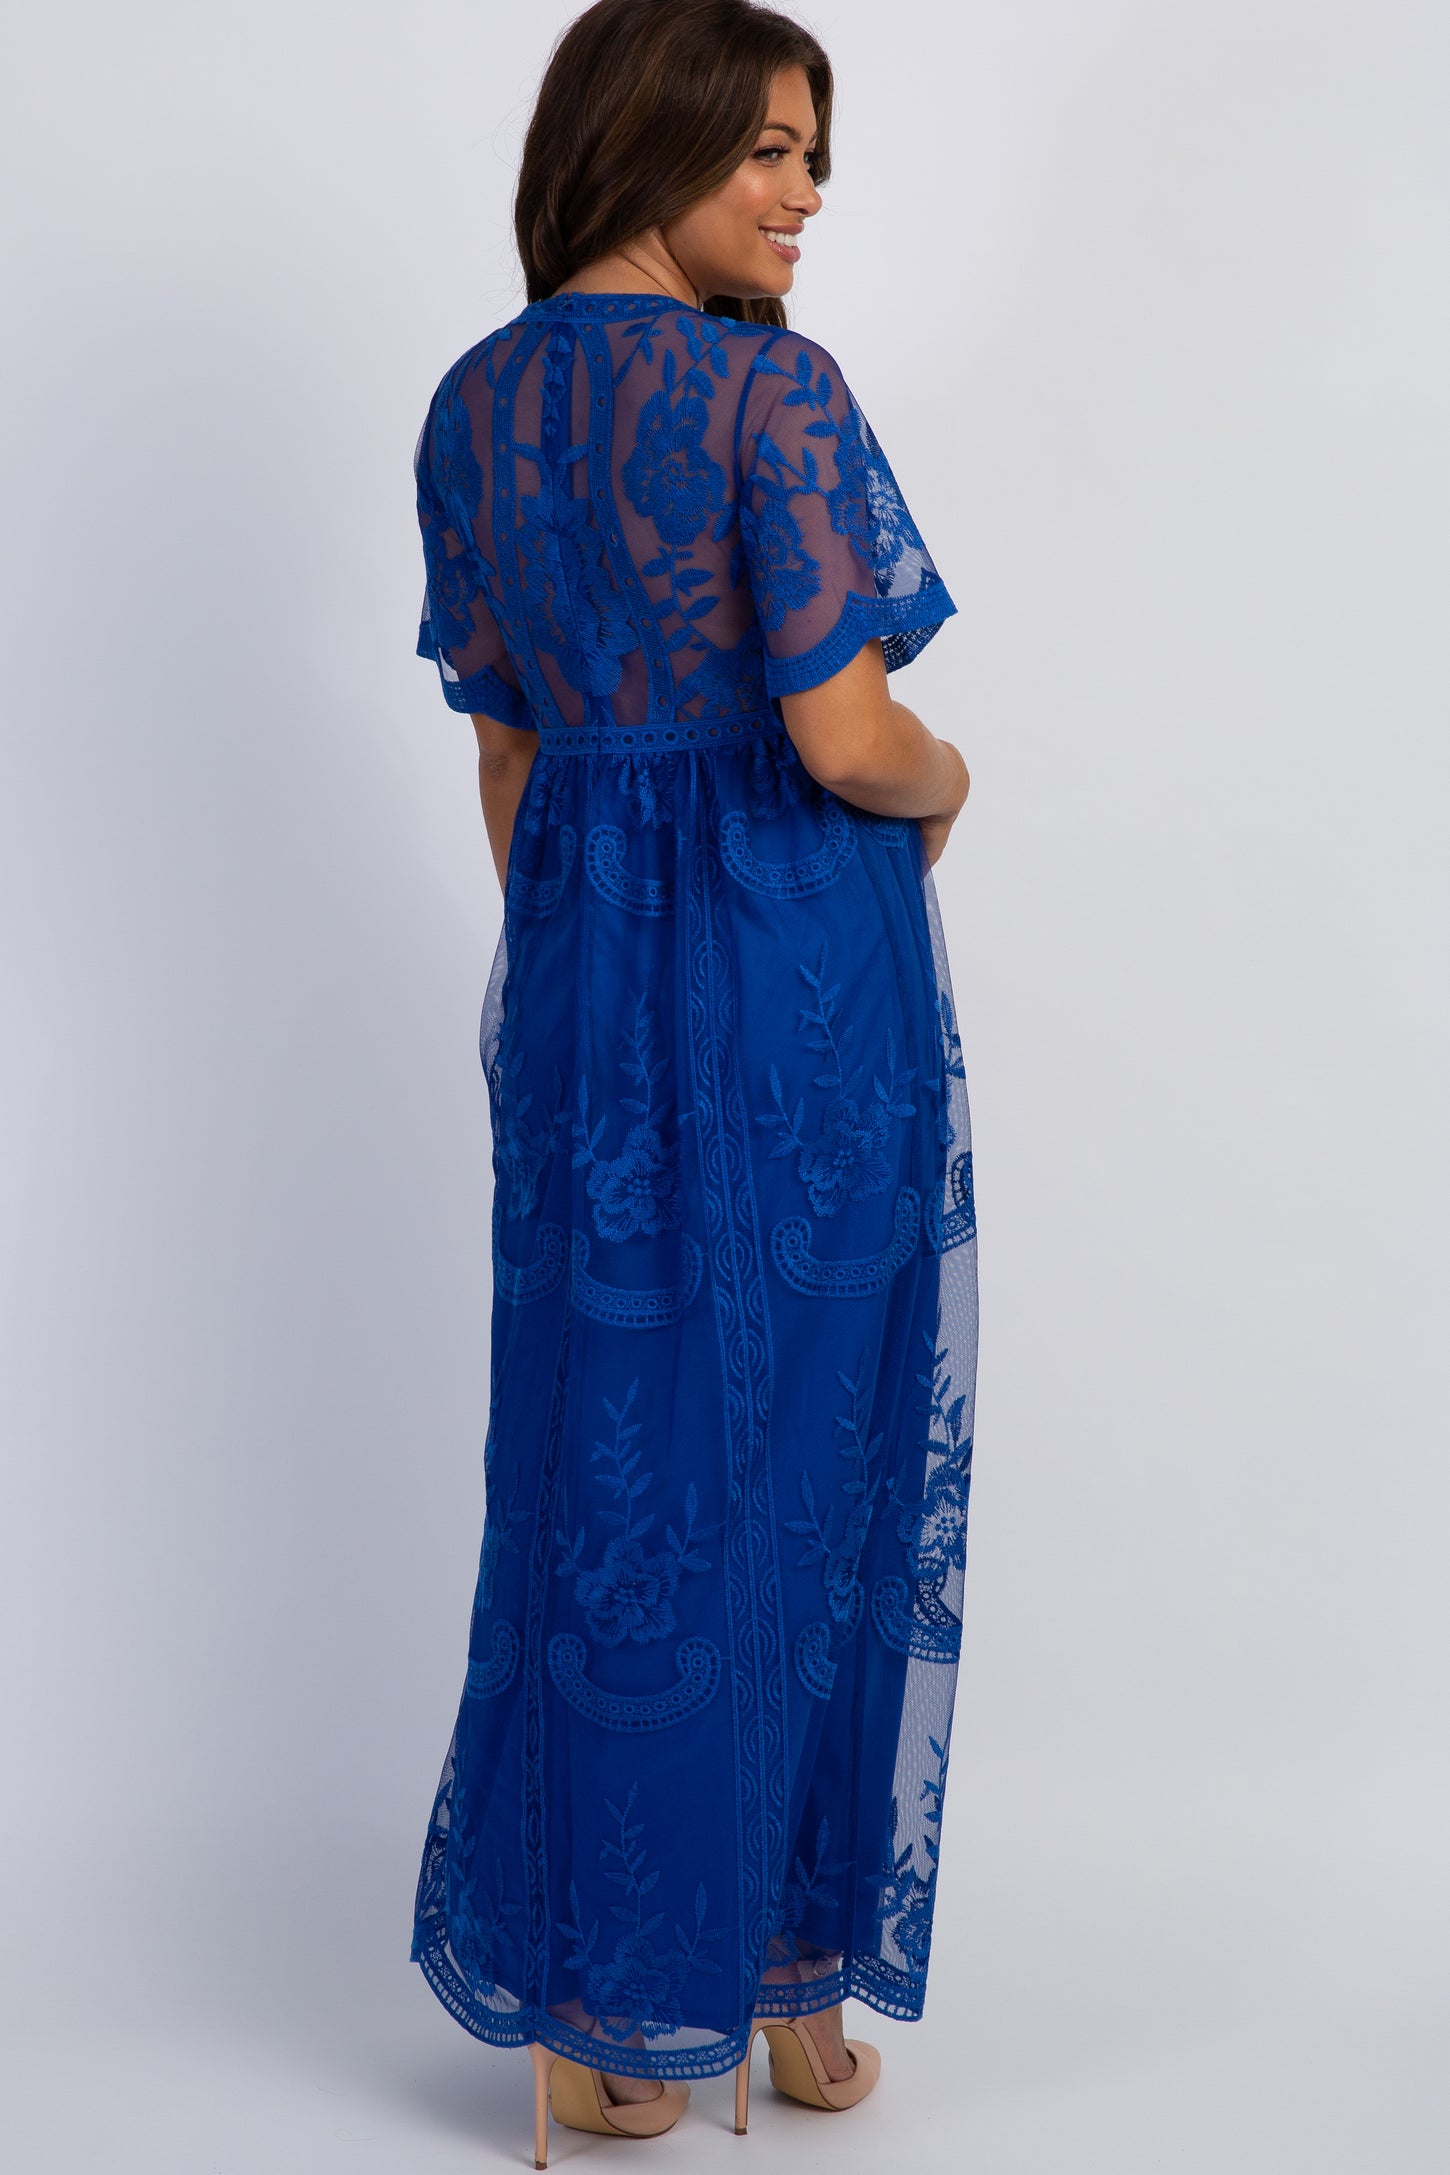 Royal Blue Lace Mesh Overlay Maternity Maxi Dress